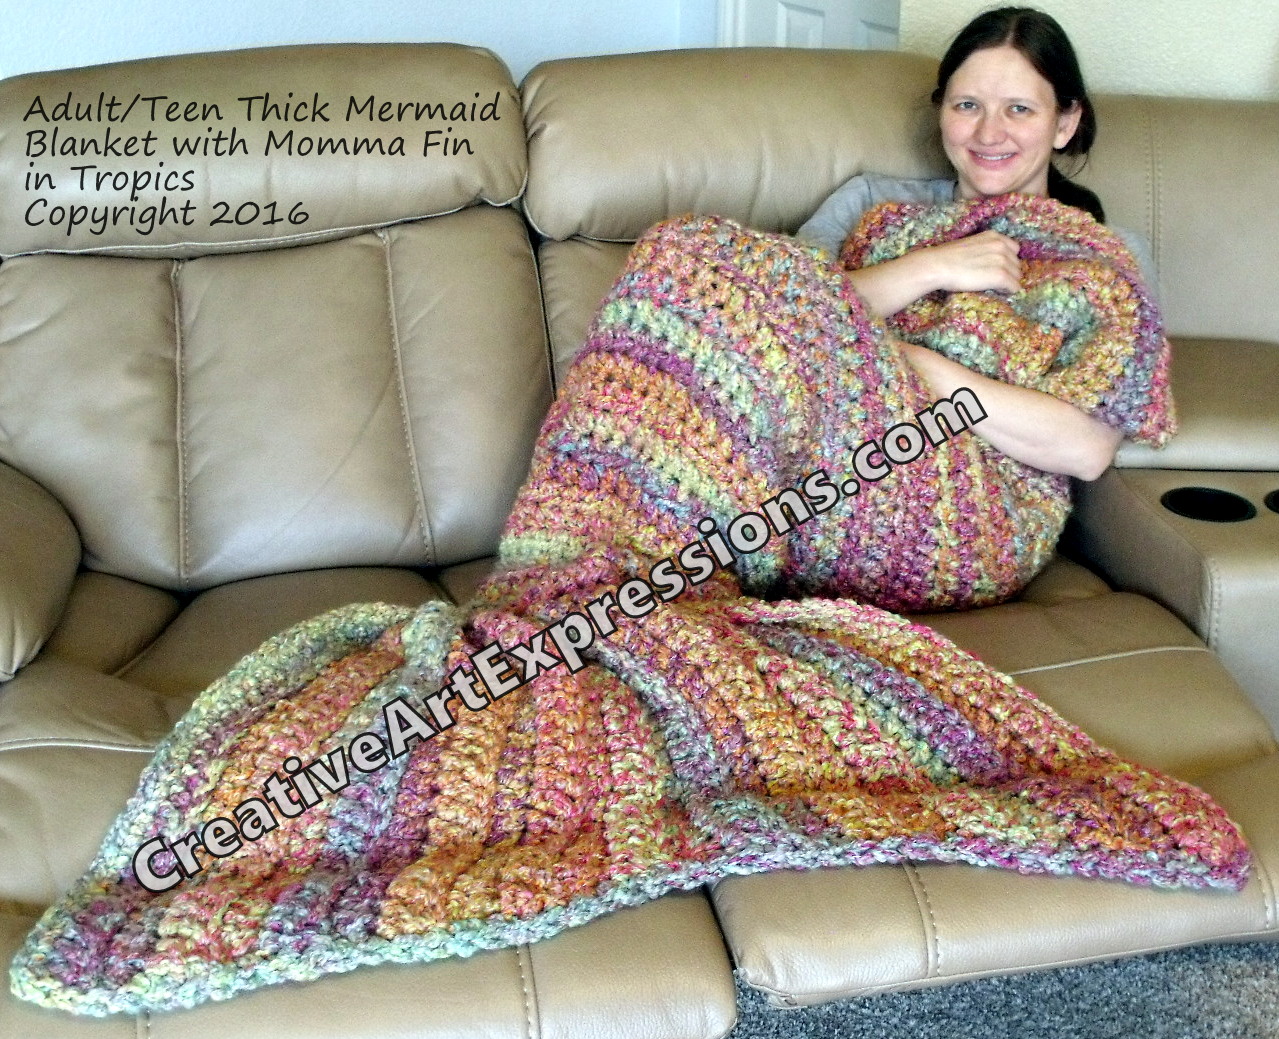 Mermaid Blanket Crocheted Thick Adult/Teen Momma Fin in Tropics